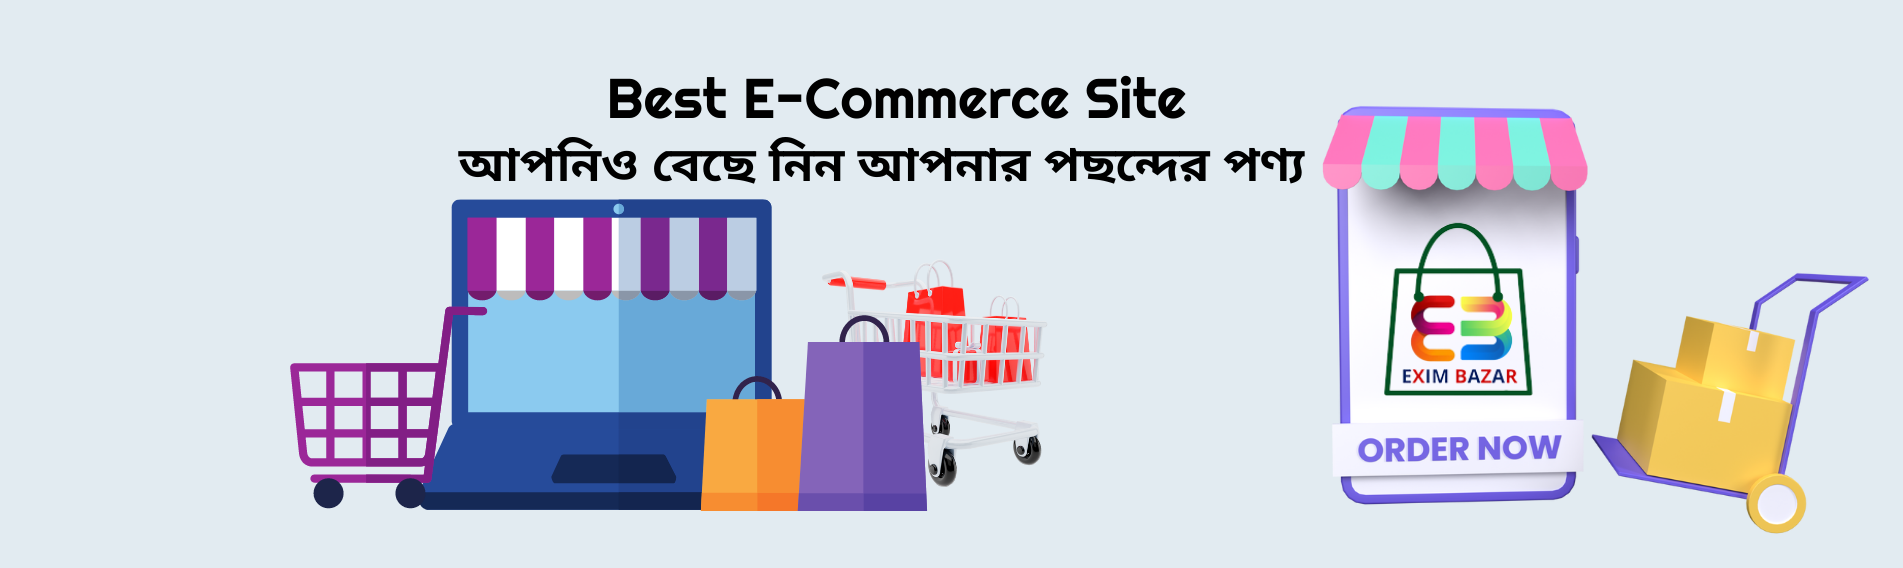 Best E-Commerce Site